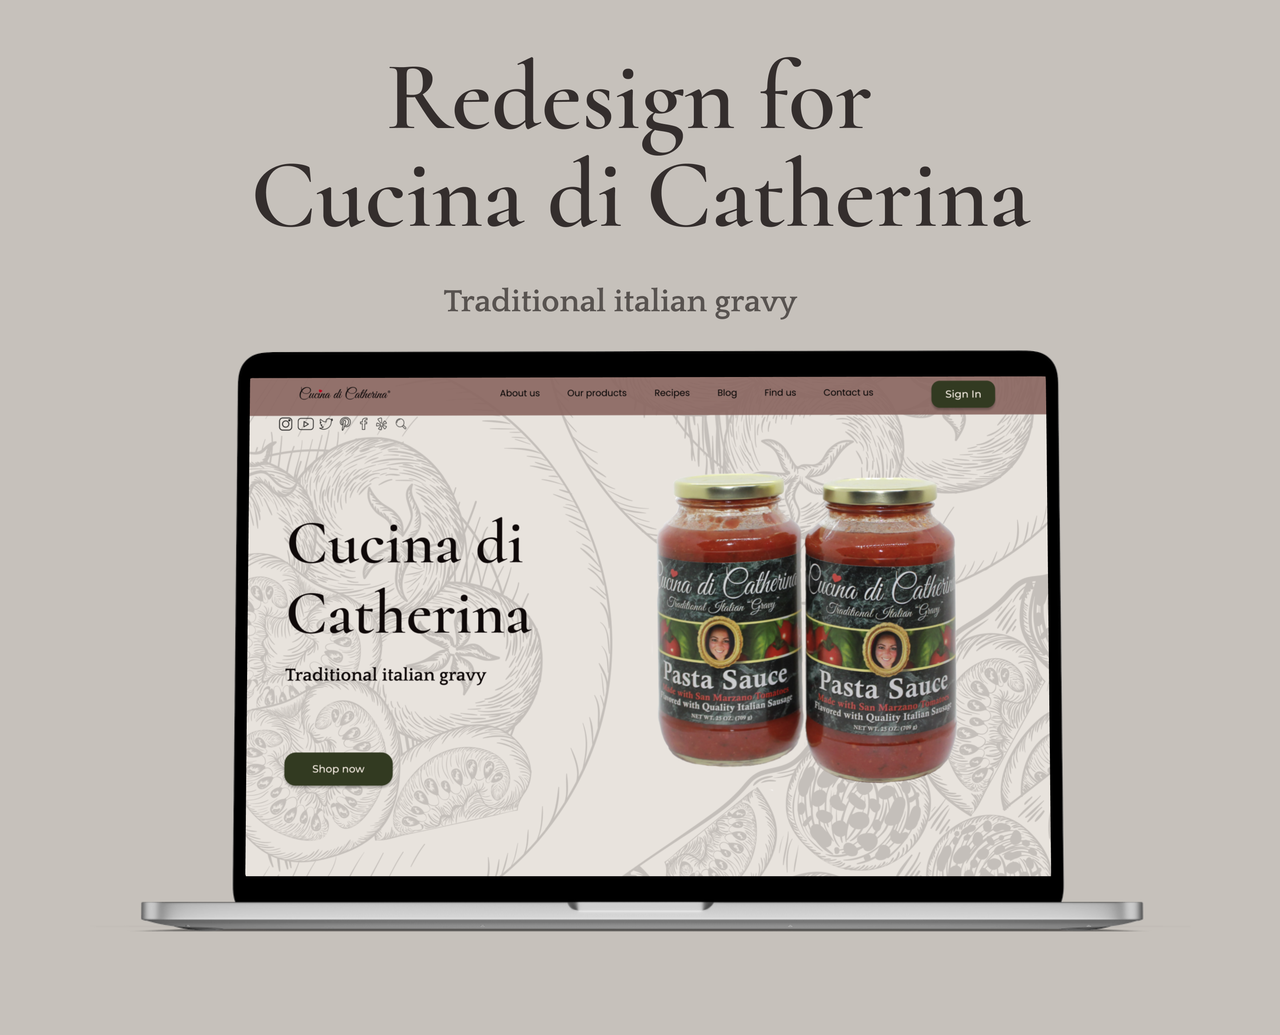 Redesign for "Cucina di Catherina" brand